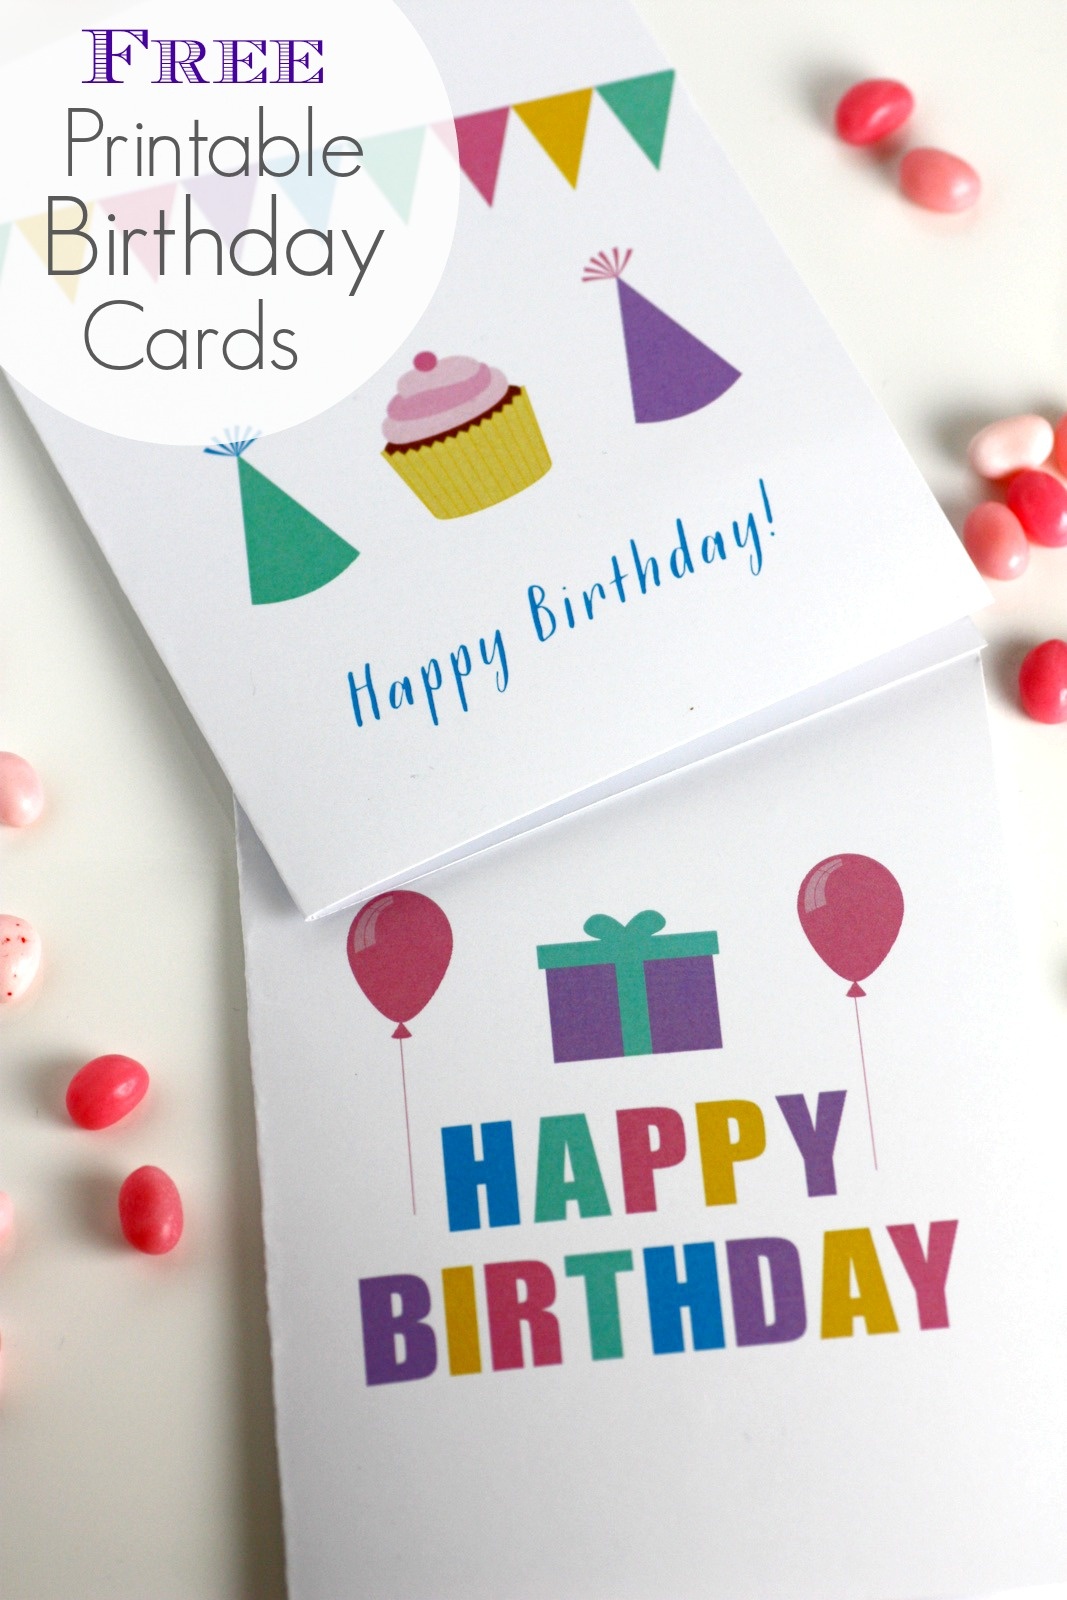 Free Printable Blank Birthday Cards | Catch My Party - Free Printable Personalized Birthday Cards